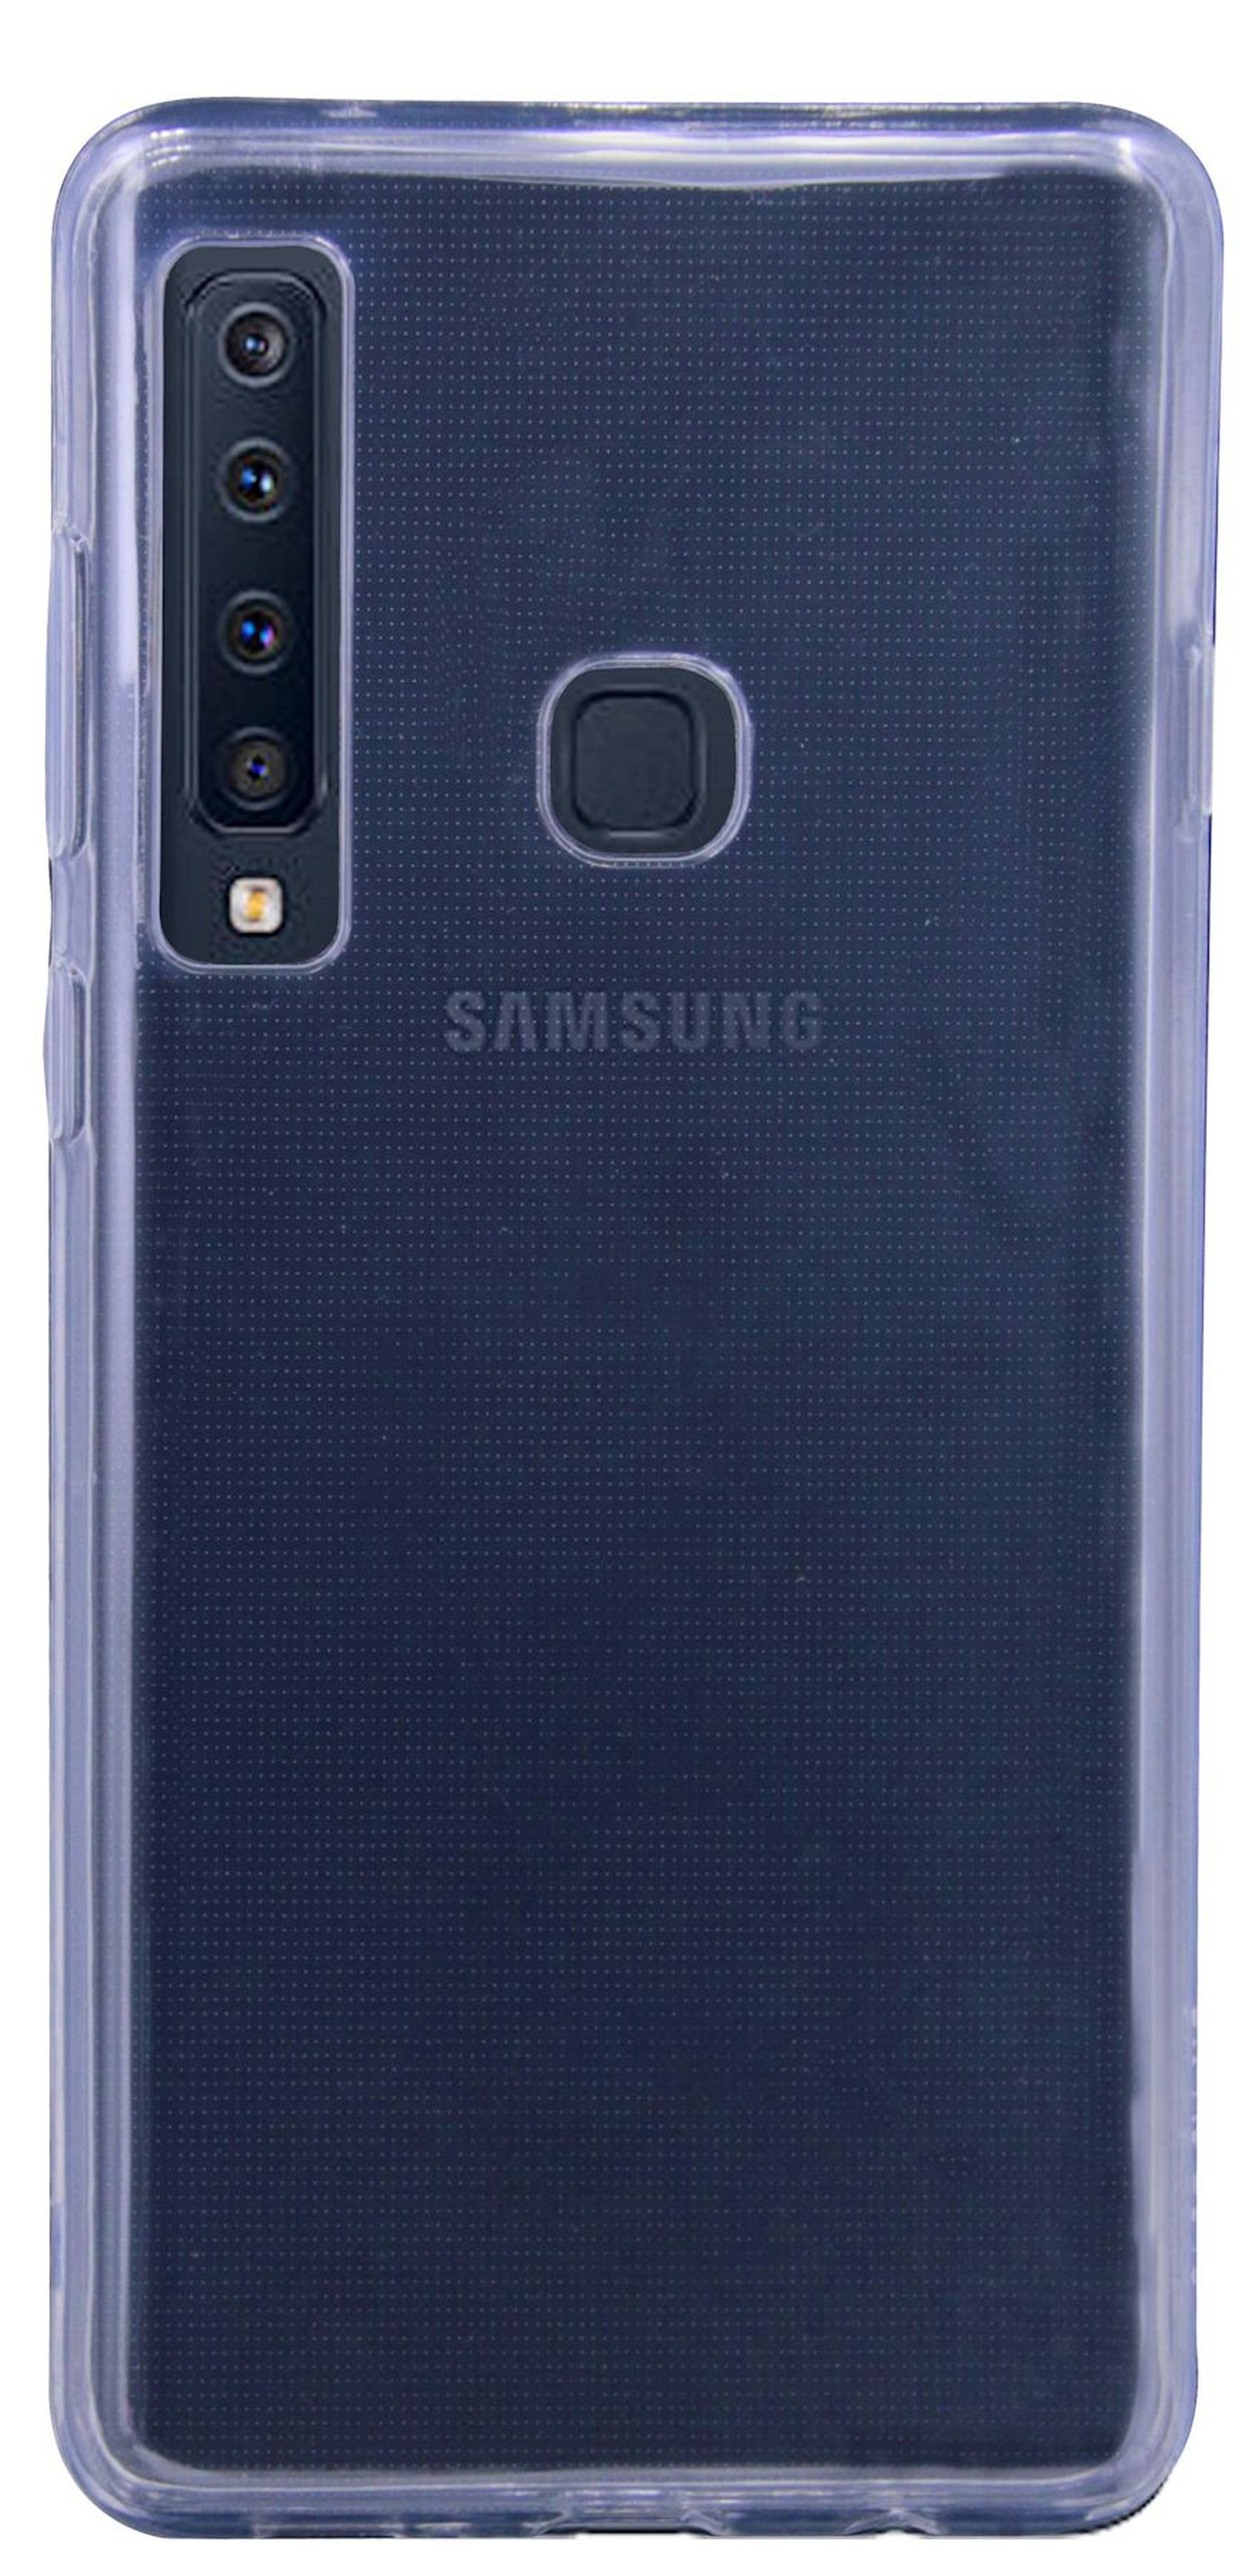 Bumper, COFI A9 Galaxy 2018, Samsung, Transparent Silikon Case, Hülle